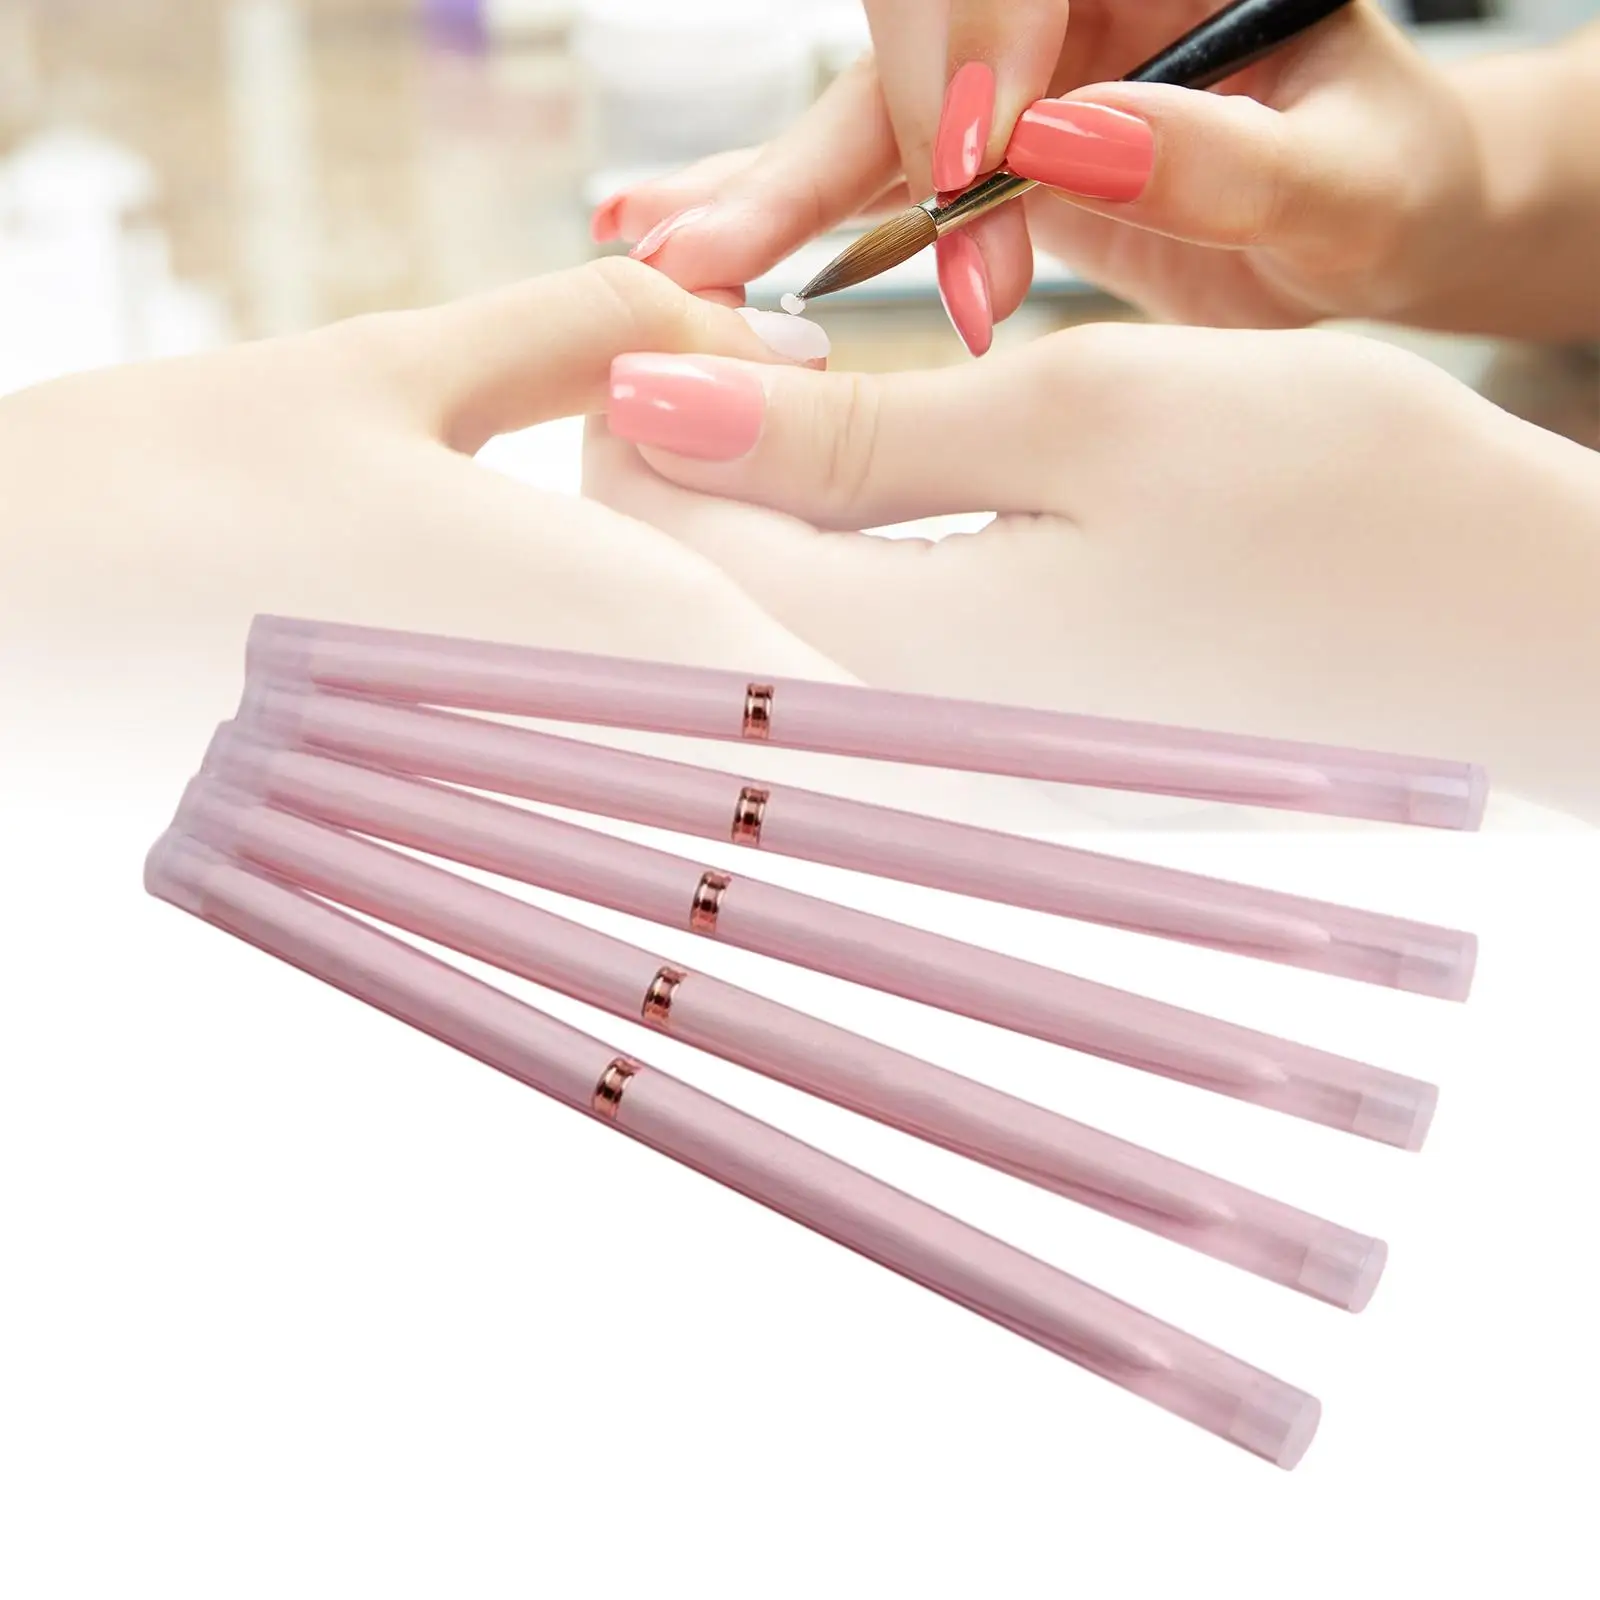 5x Nail Art Brushes Kit Nail Gel Polish Painting Nail Design Brushes Nail Art Pens for DIY Professional Design Delicate Coloring